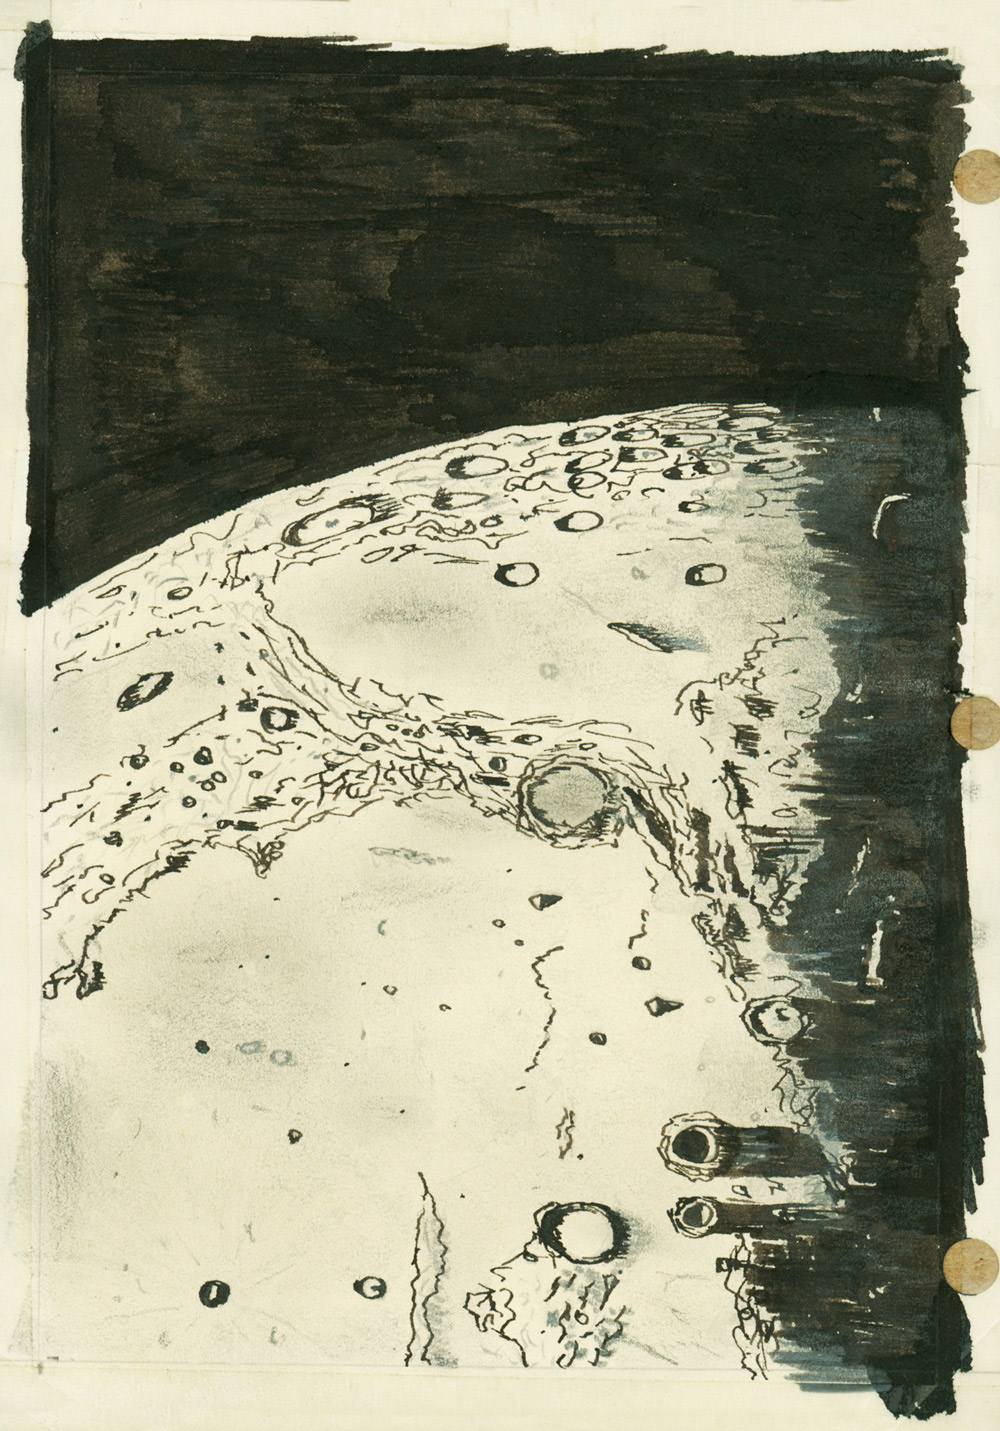 Joe Caruso's lunar surface